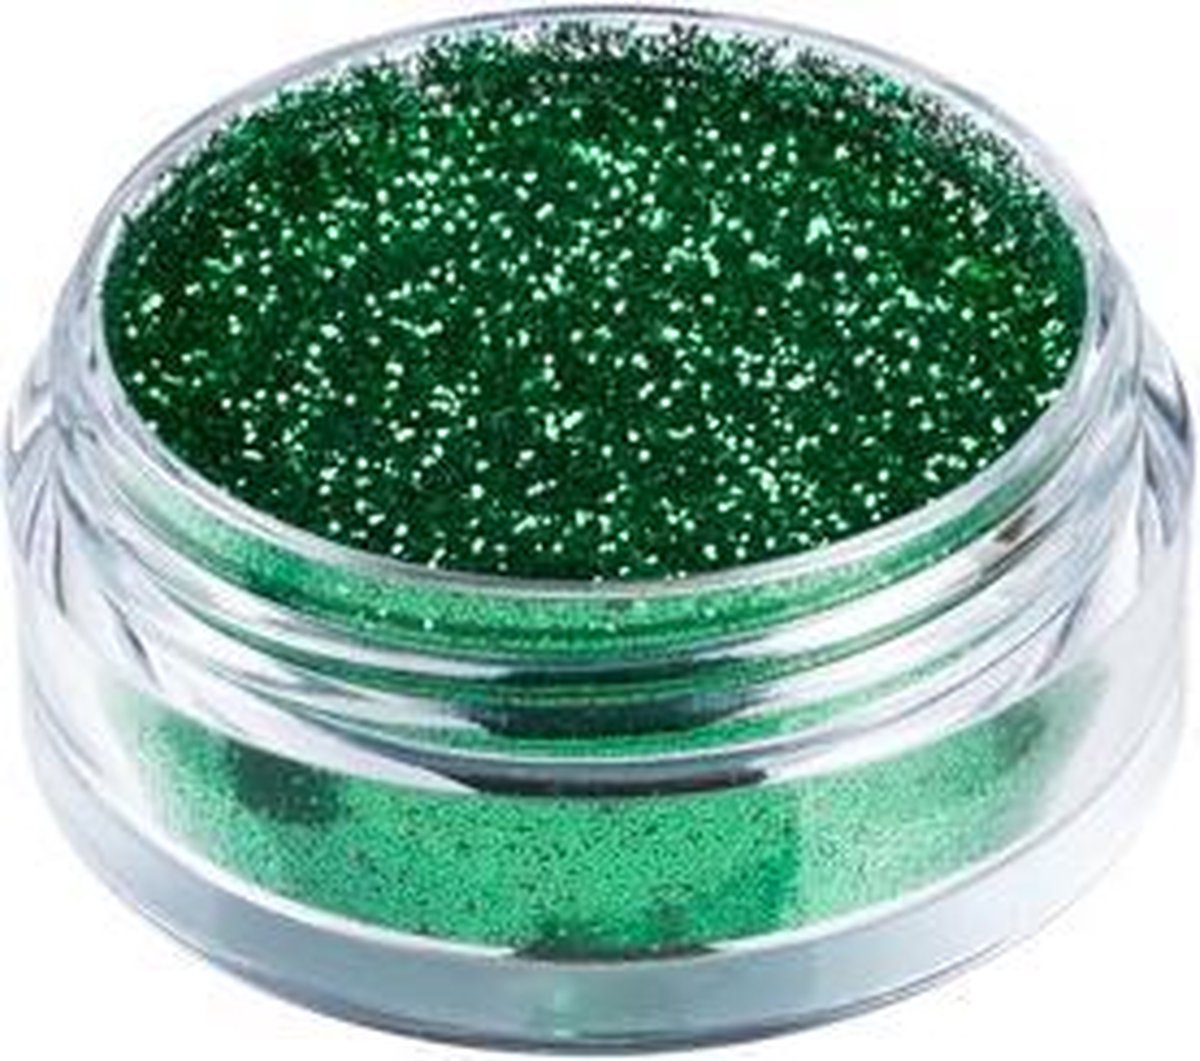 Ben Nye Sparklers Glitter - Neon Green